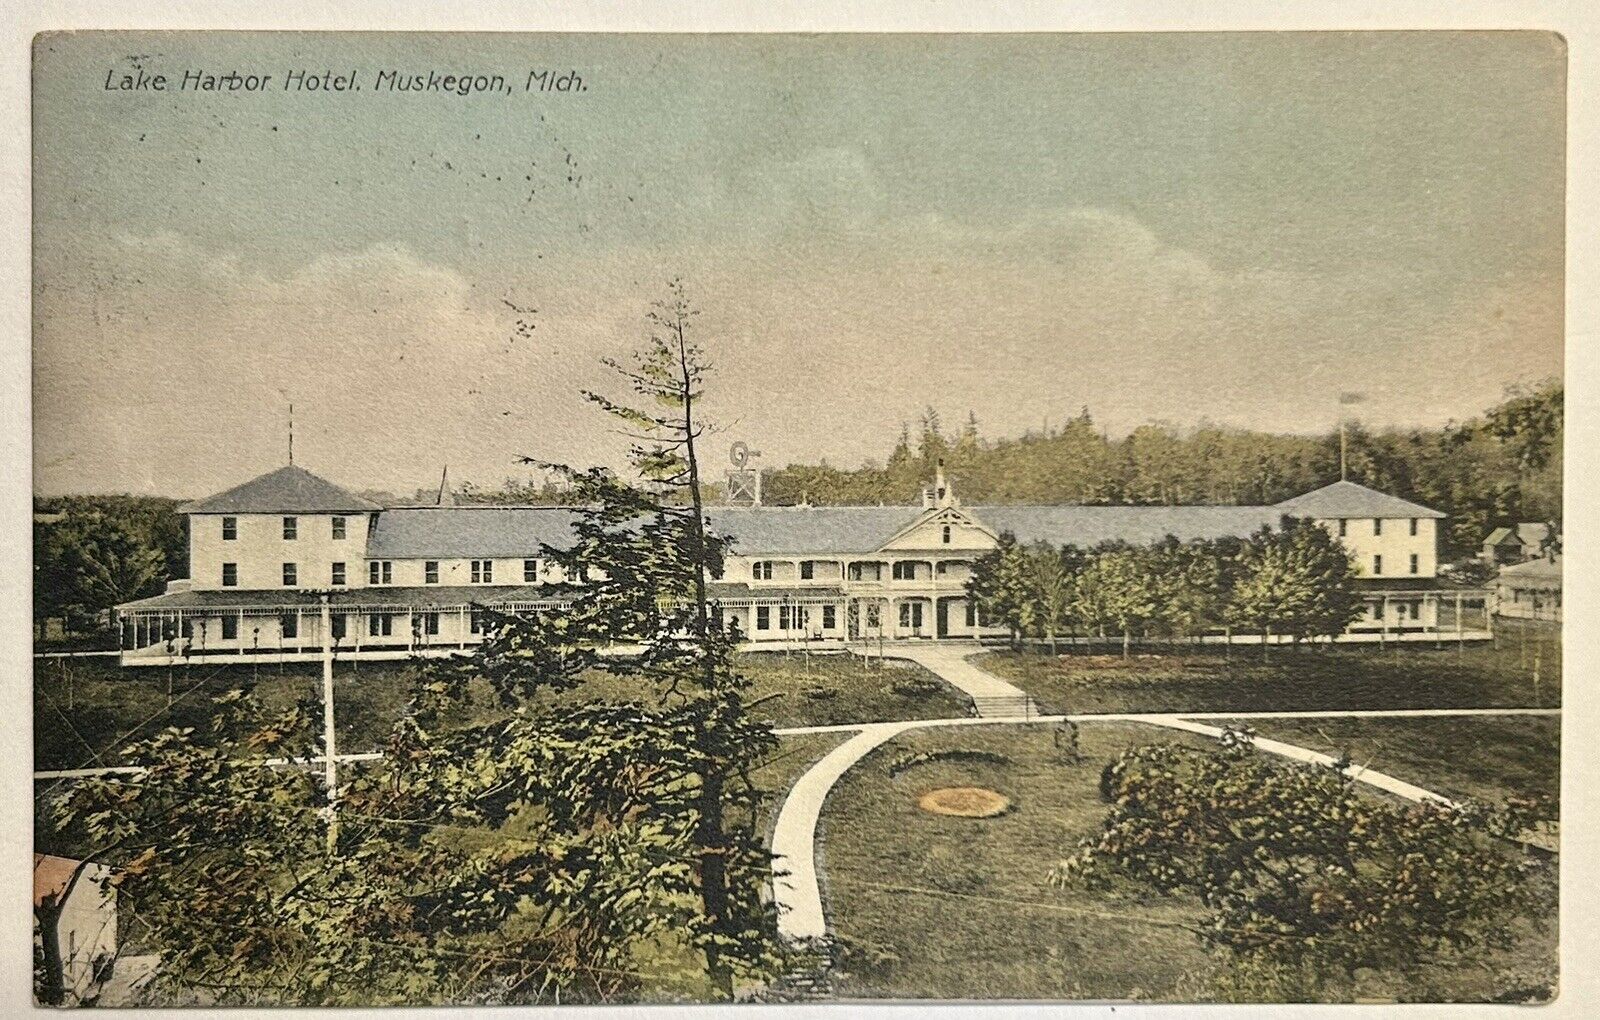 Lake Harbor Hotel, Muskegon Michigan. 1908 Vintage Postcard